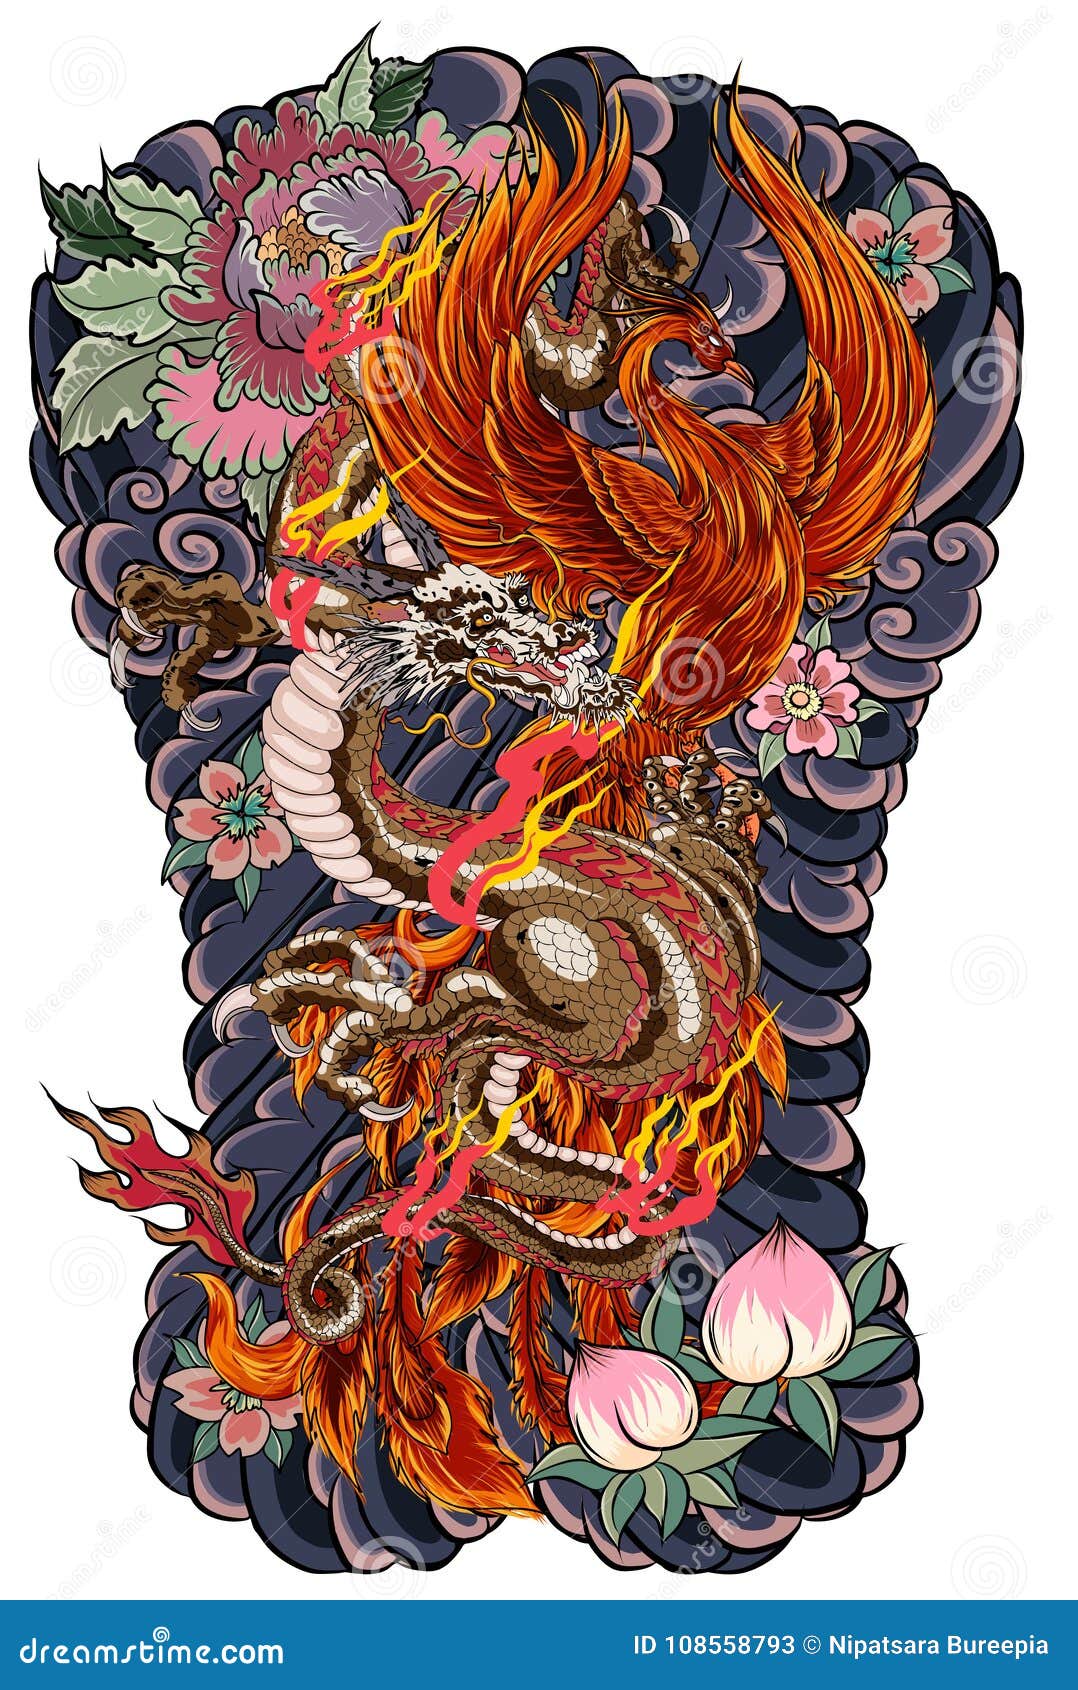 Dragon Phoenix Tattoo by Loren86 on DeviantArt